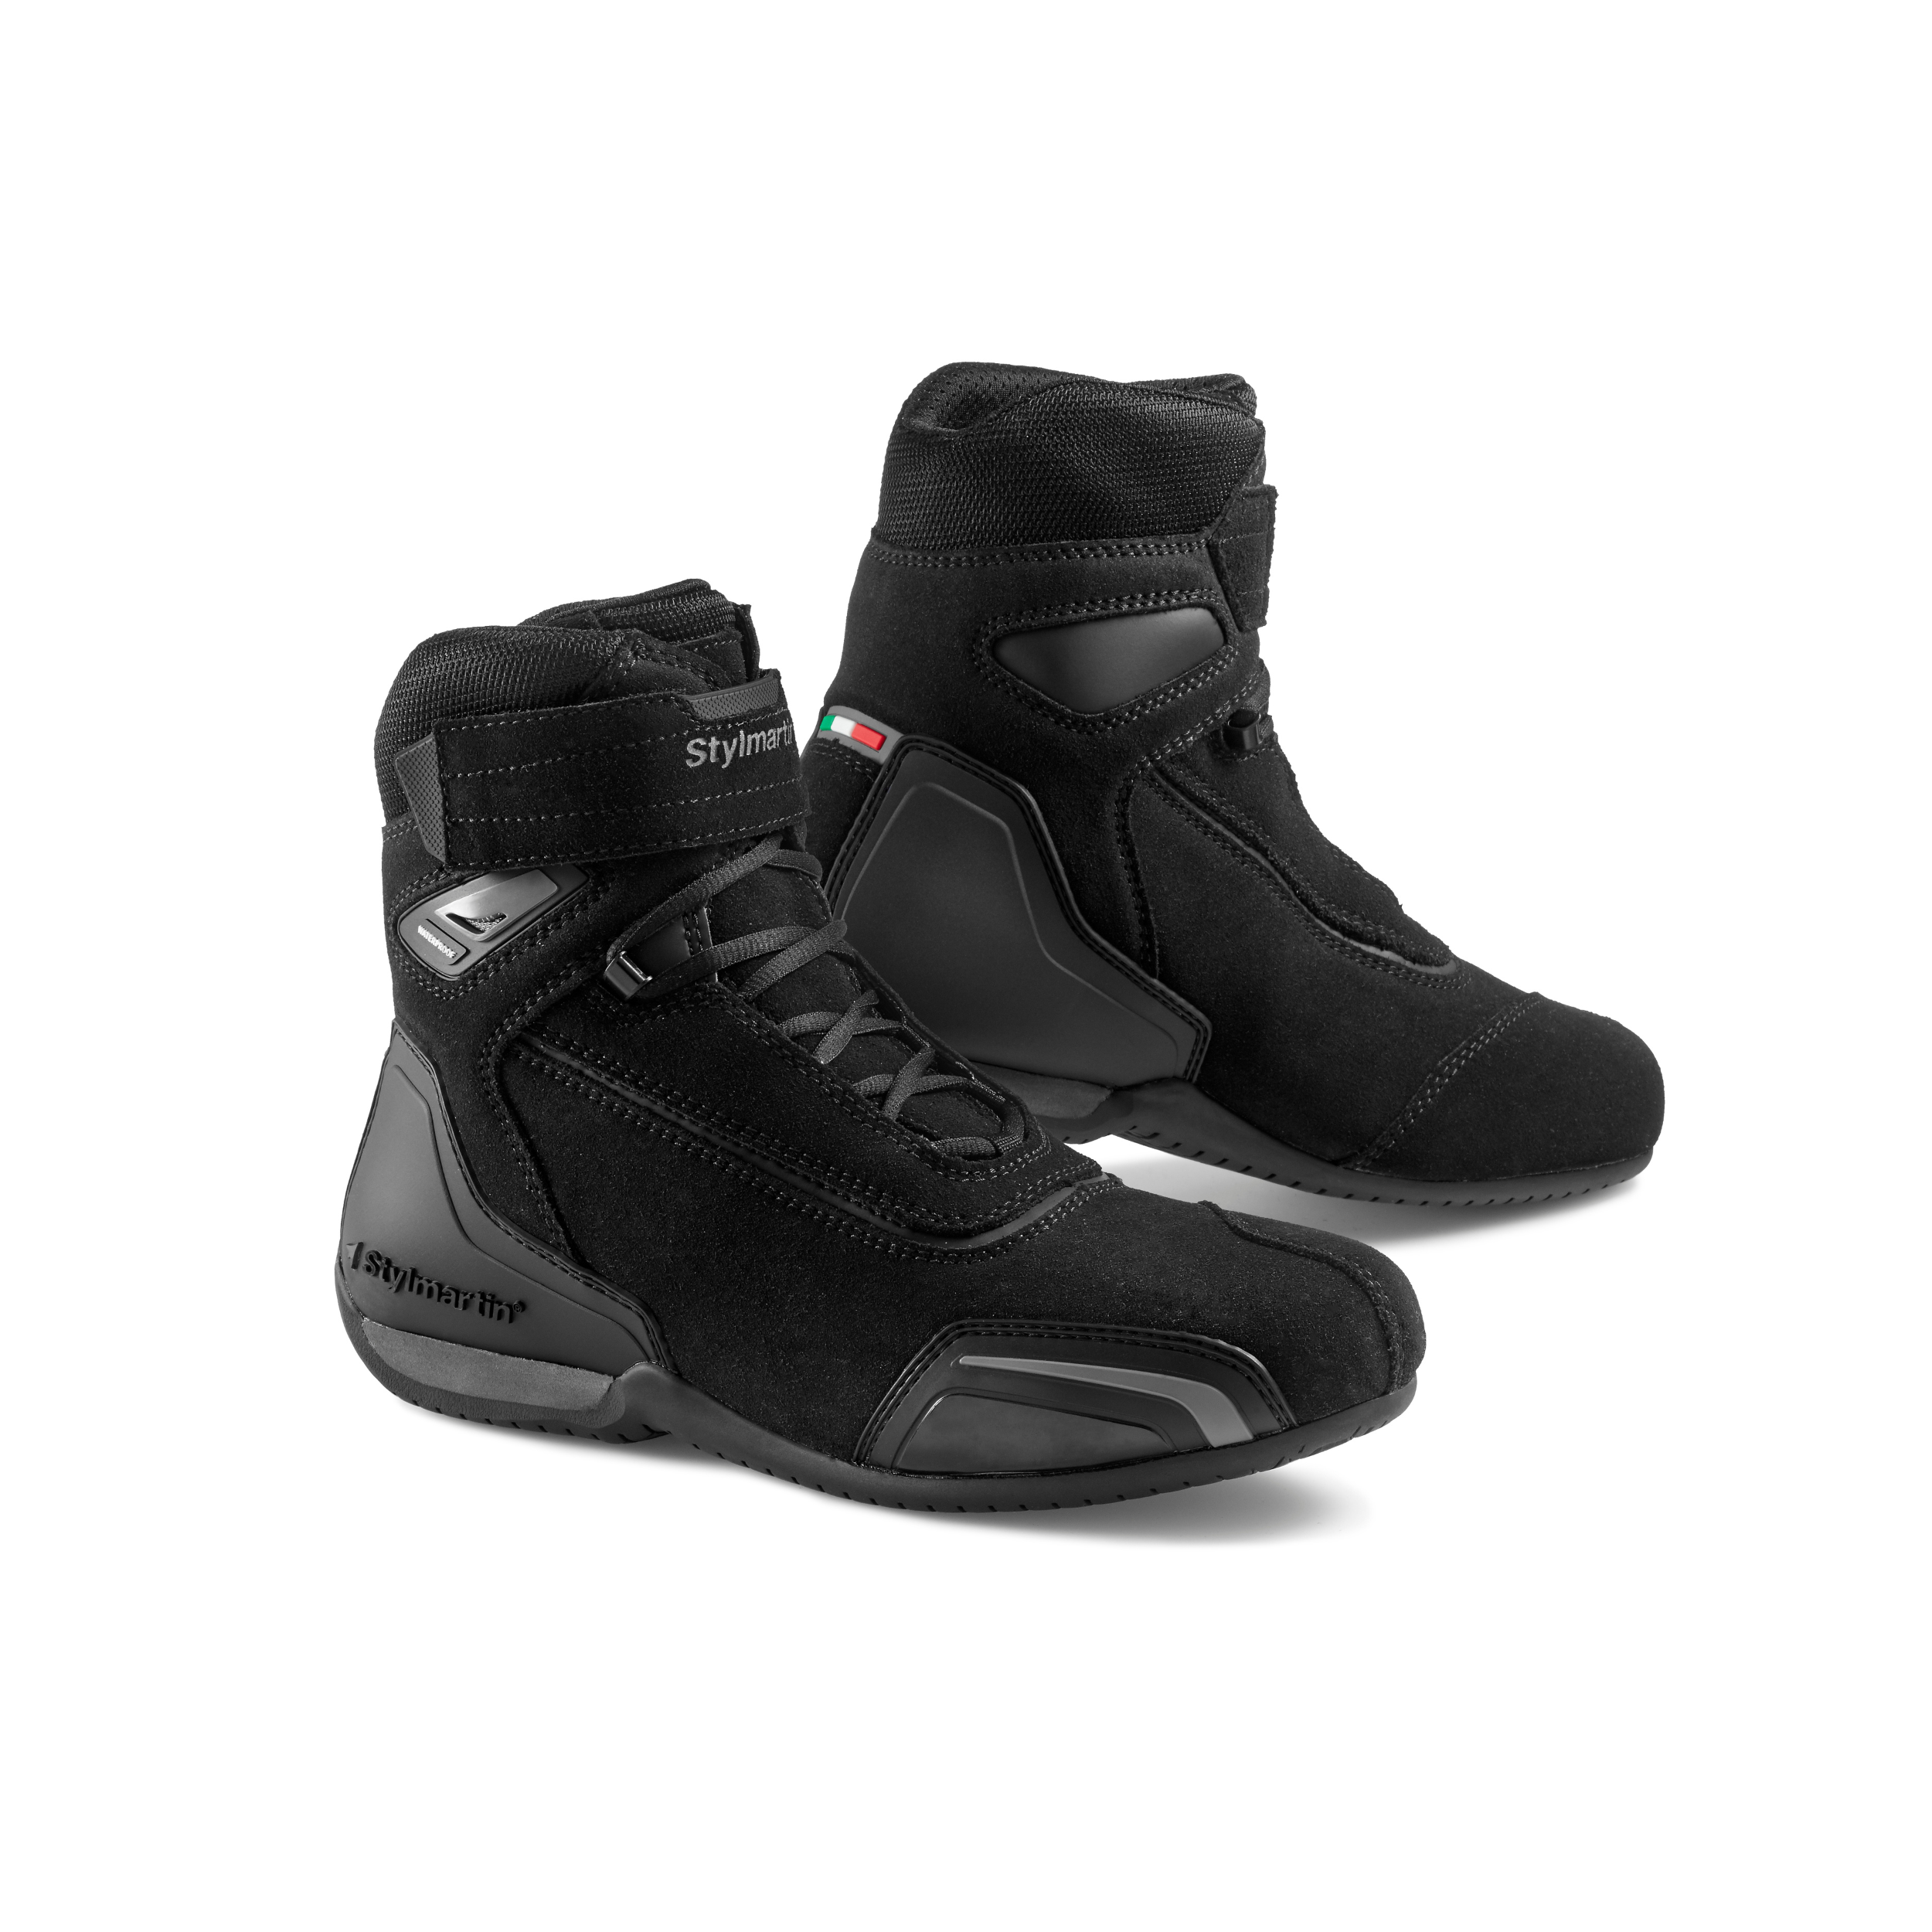 Stylmartin Velox WP Boots - Black Anthracite